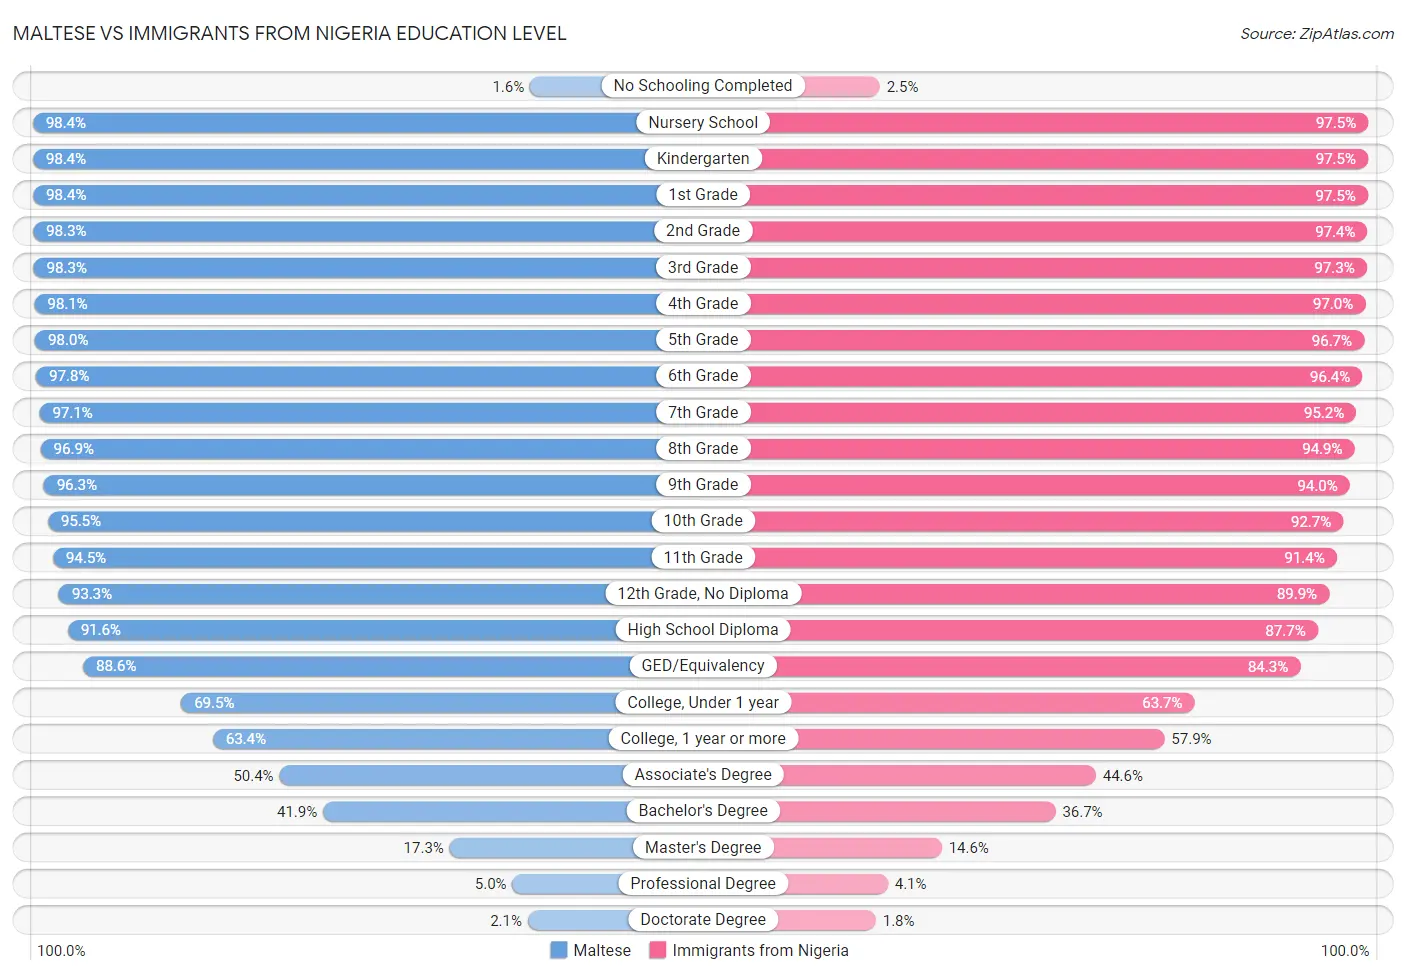 Maltese vs Immigrants from Nigeria Education Level